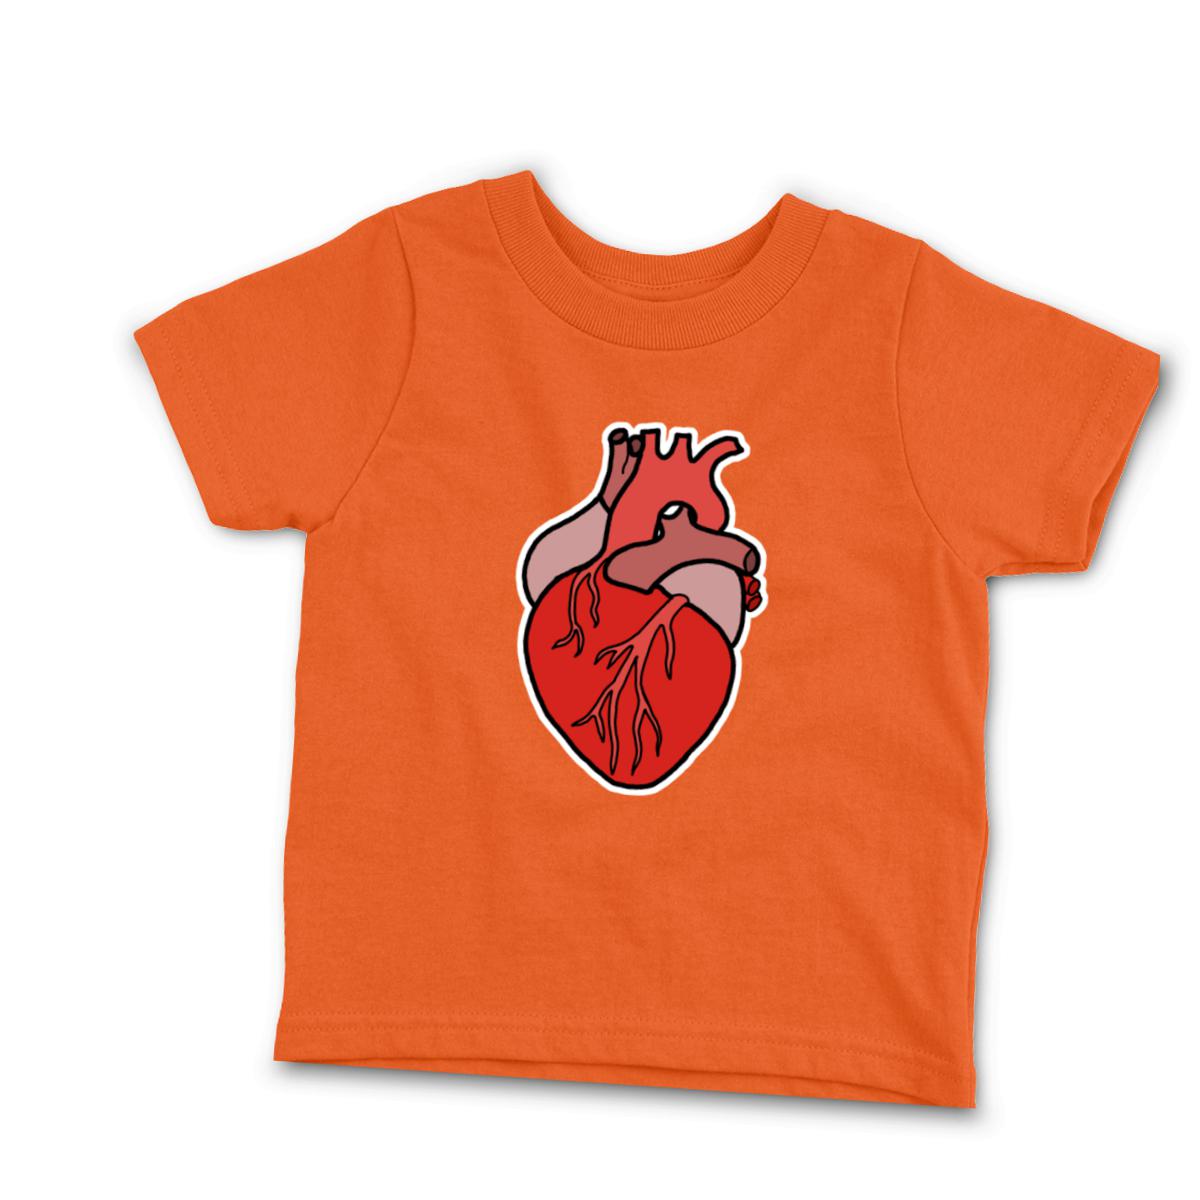 Illustrative Heart Toddler Tee 4T orange